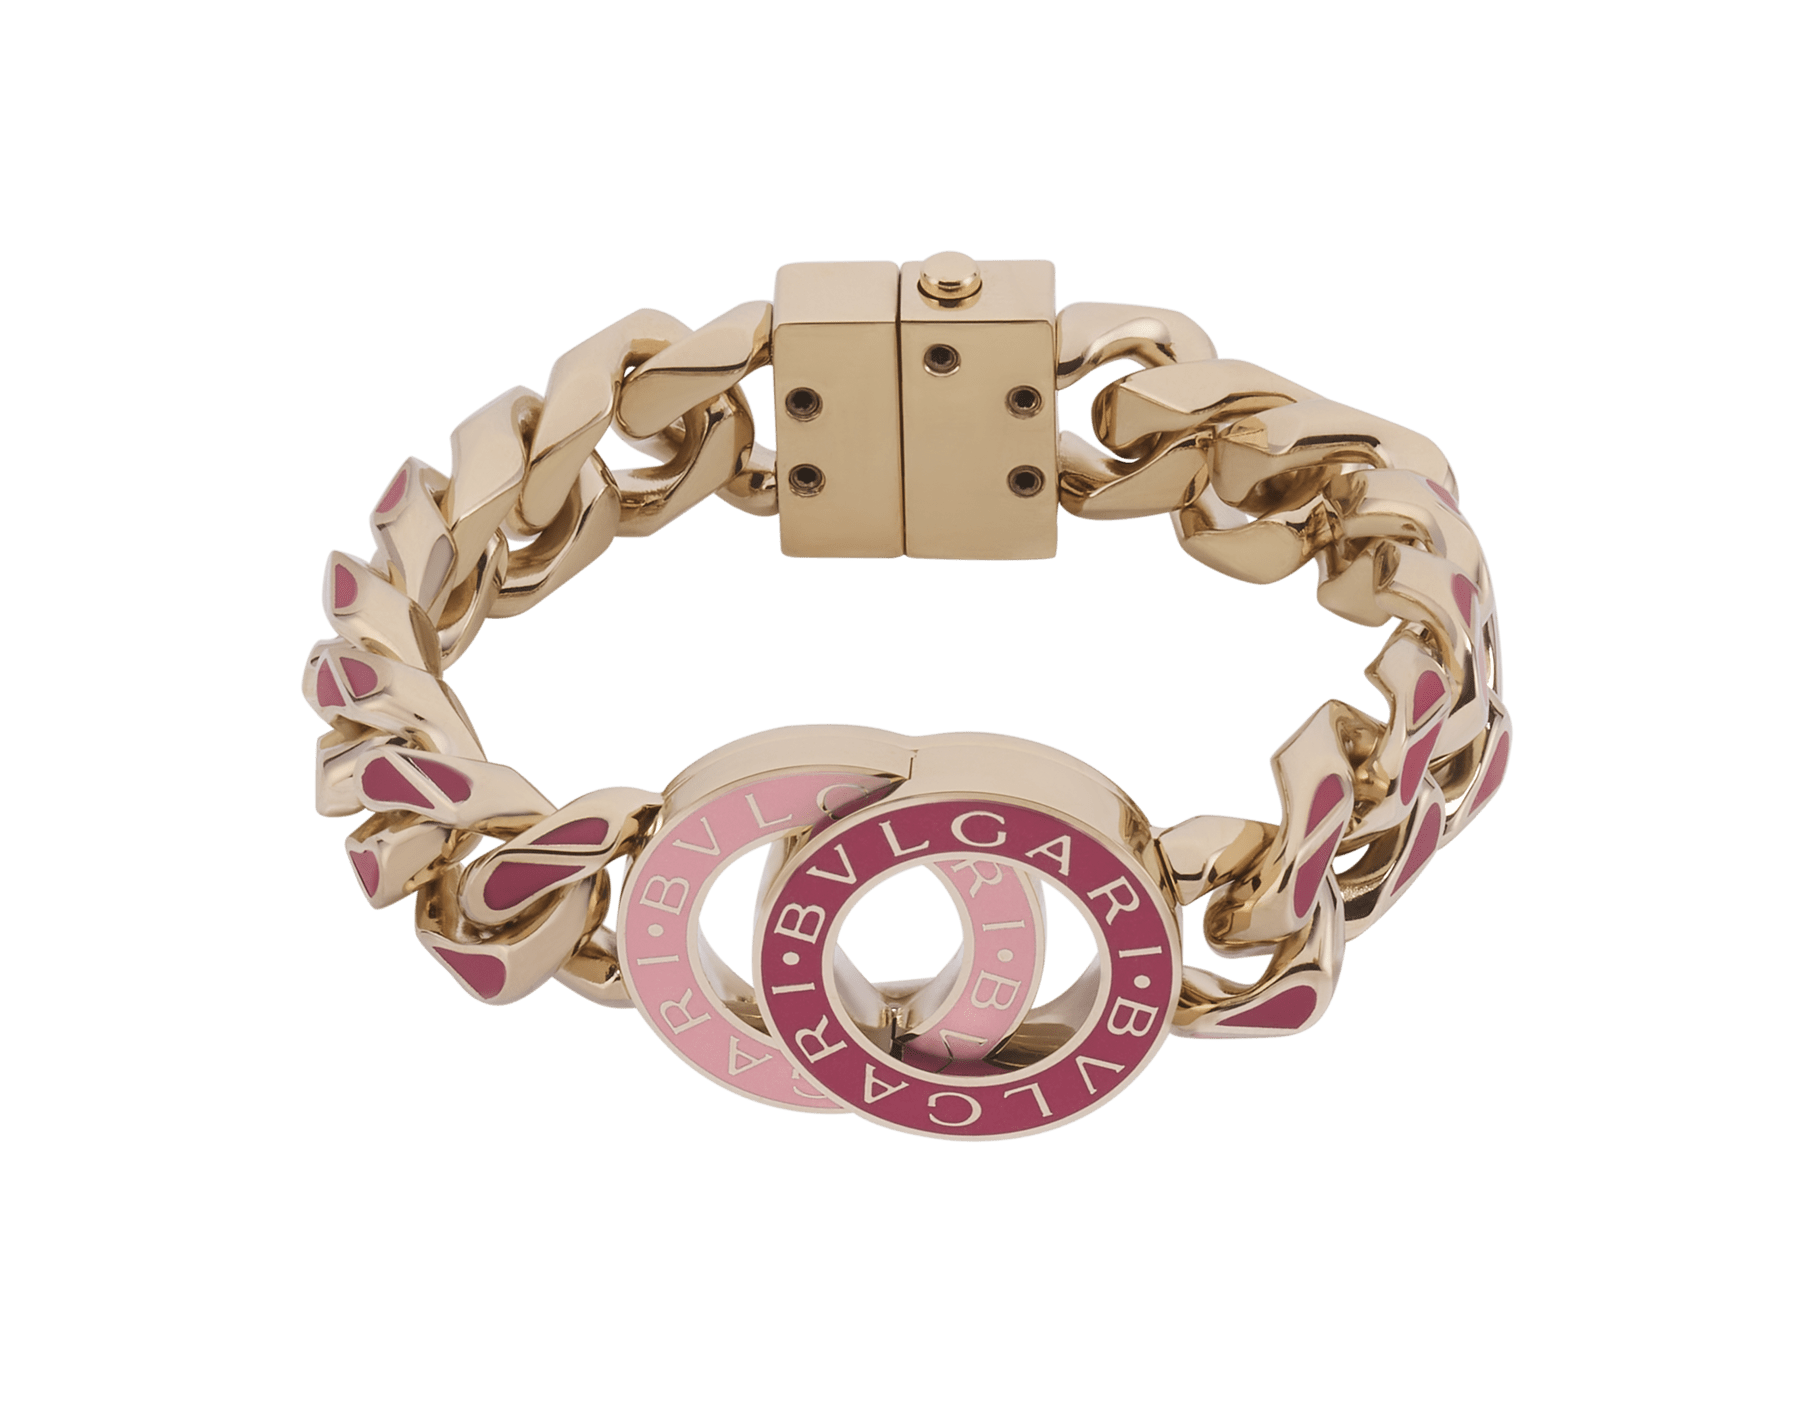 BULGARI BULGARI Maxi Chain bracelet in light gold-plated brass with anemone spinel pinkish red and primrose quartz pink enamel inserts. Iconic embellishment with anemone spinel pinkish red and primrose quartz pink enamel, and clasp closure. CHUNKYBBBRCLT-MC image 1